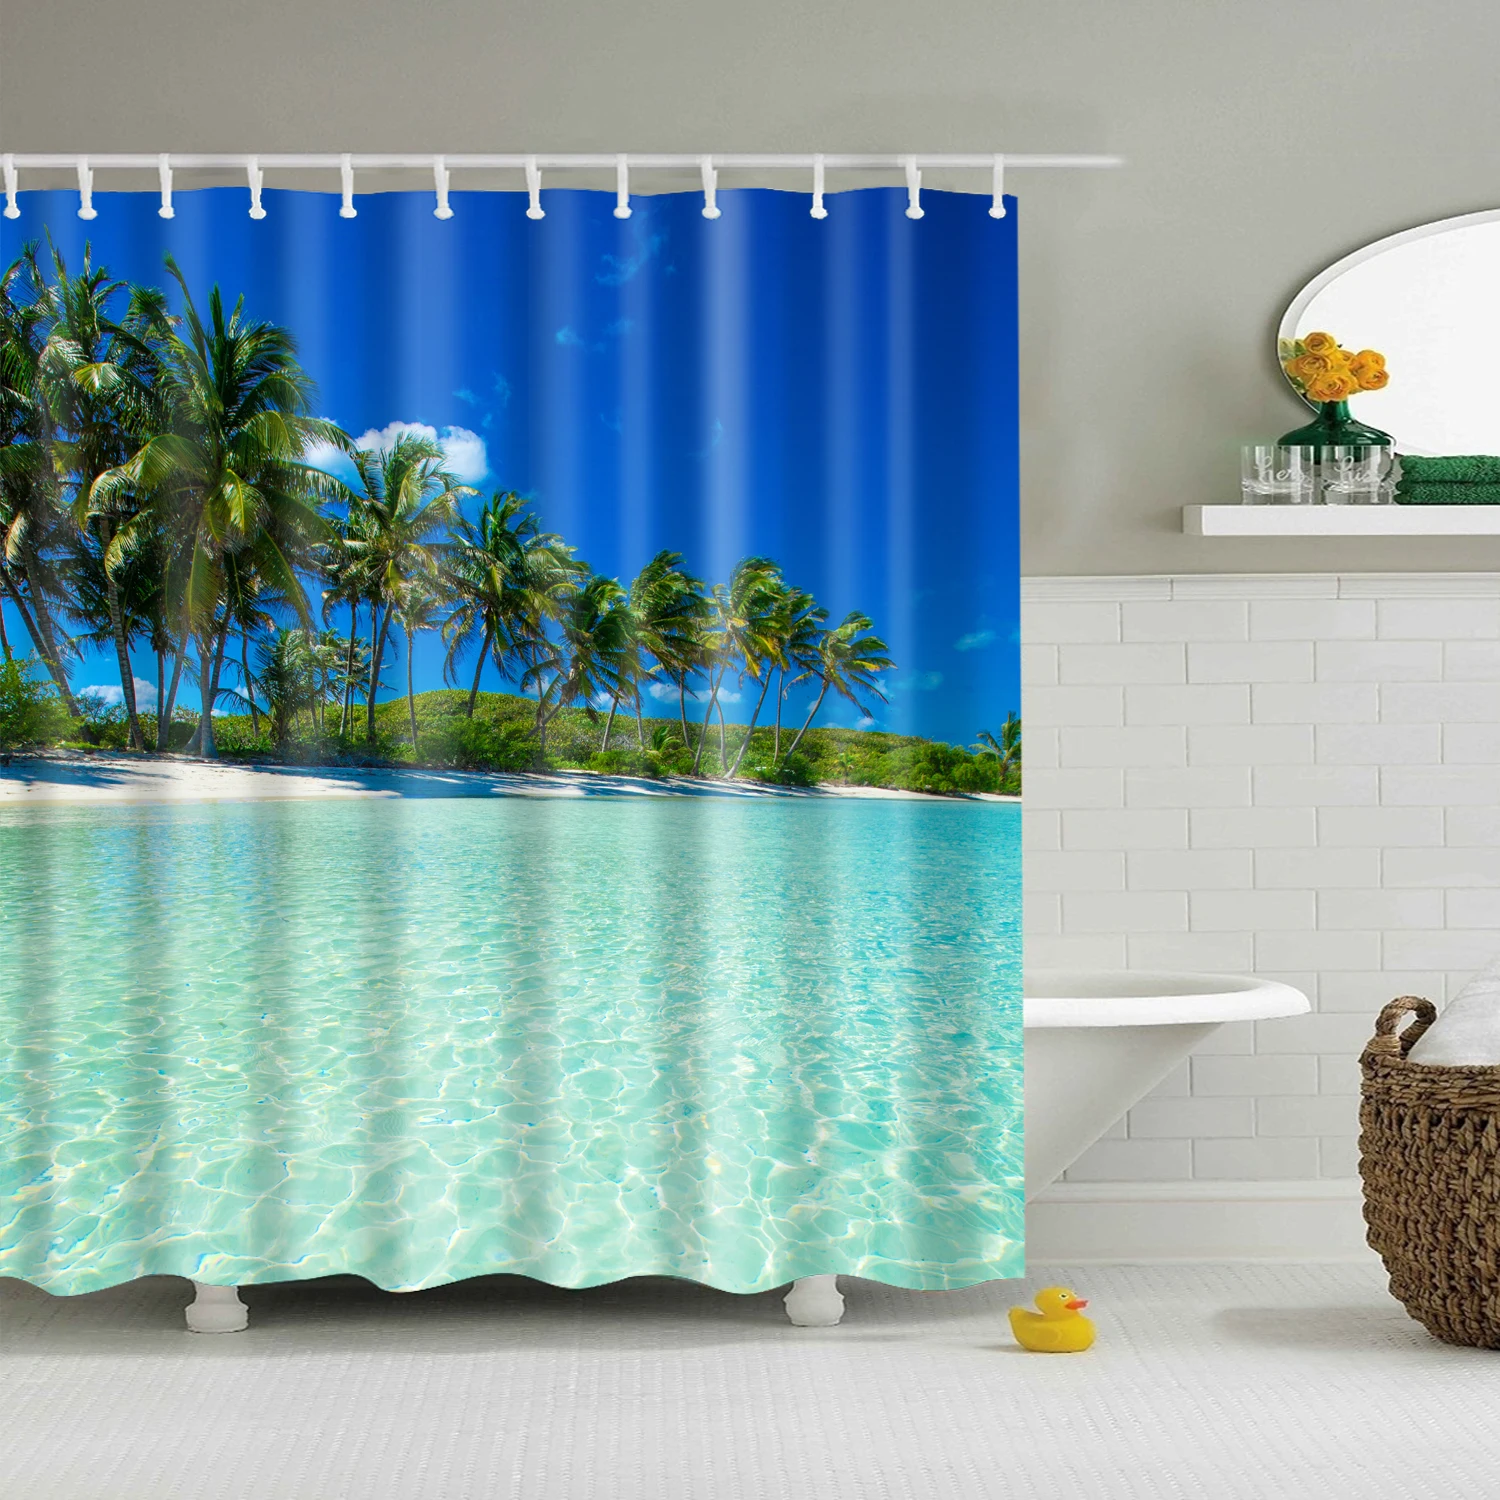 Blue Sky sea Landscape False window Shower Curtain wash Bathroom shower Waterproof Mildewproof Decor with hooks 180x200 cm large